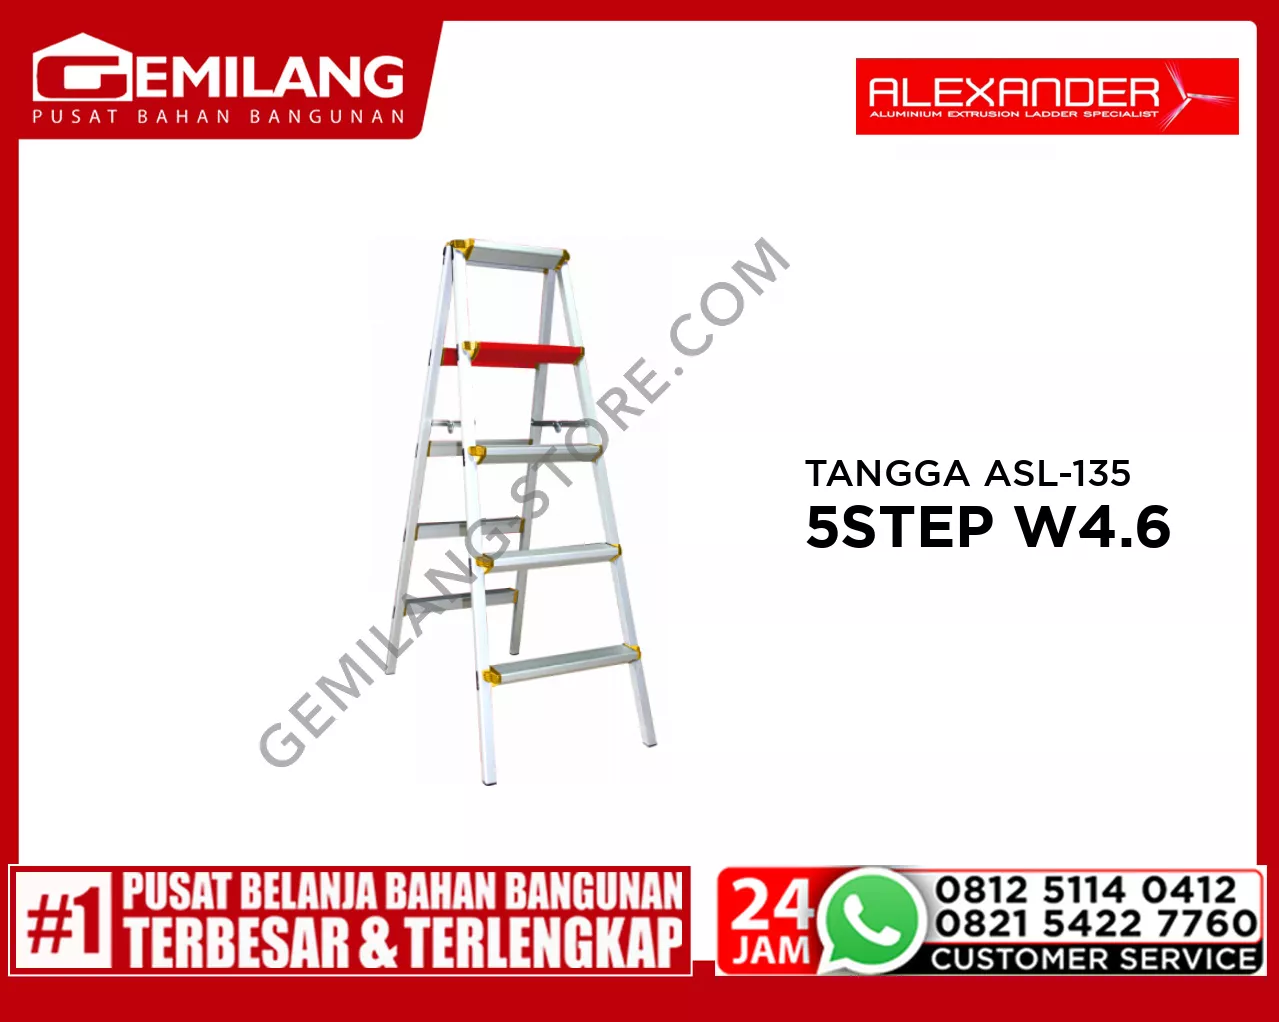 ALEXANDER TANGGA ASL-135 STEPS 5 W4.6 T135cm